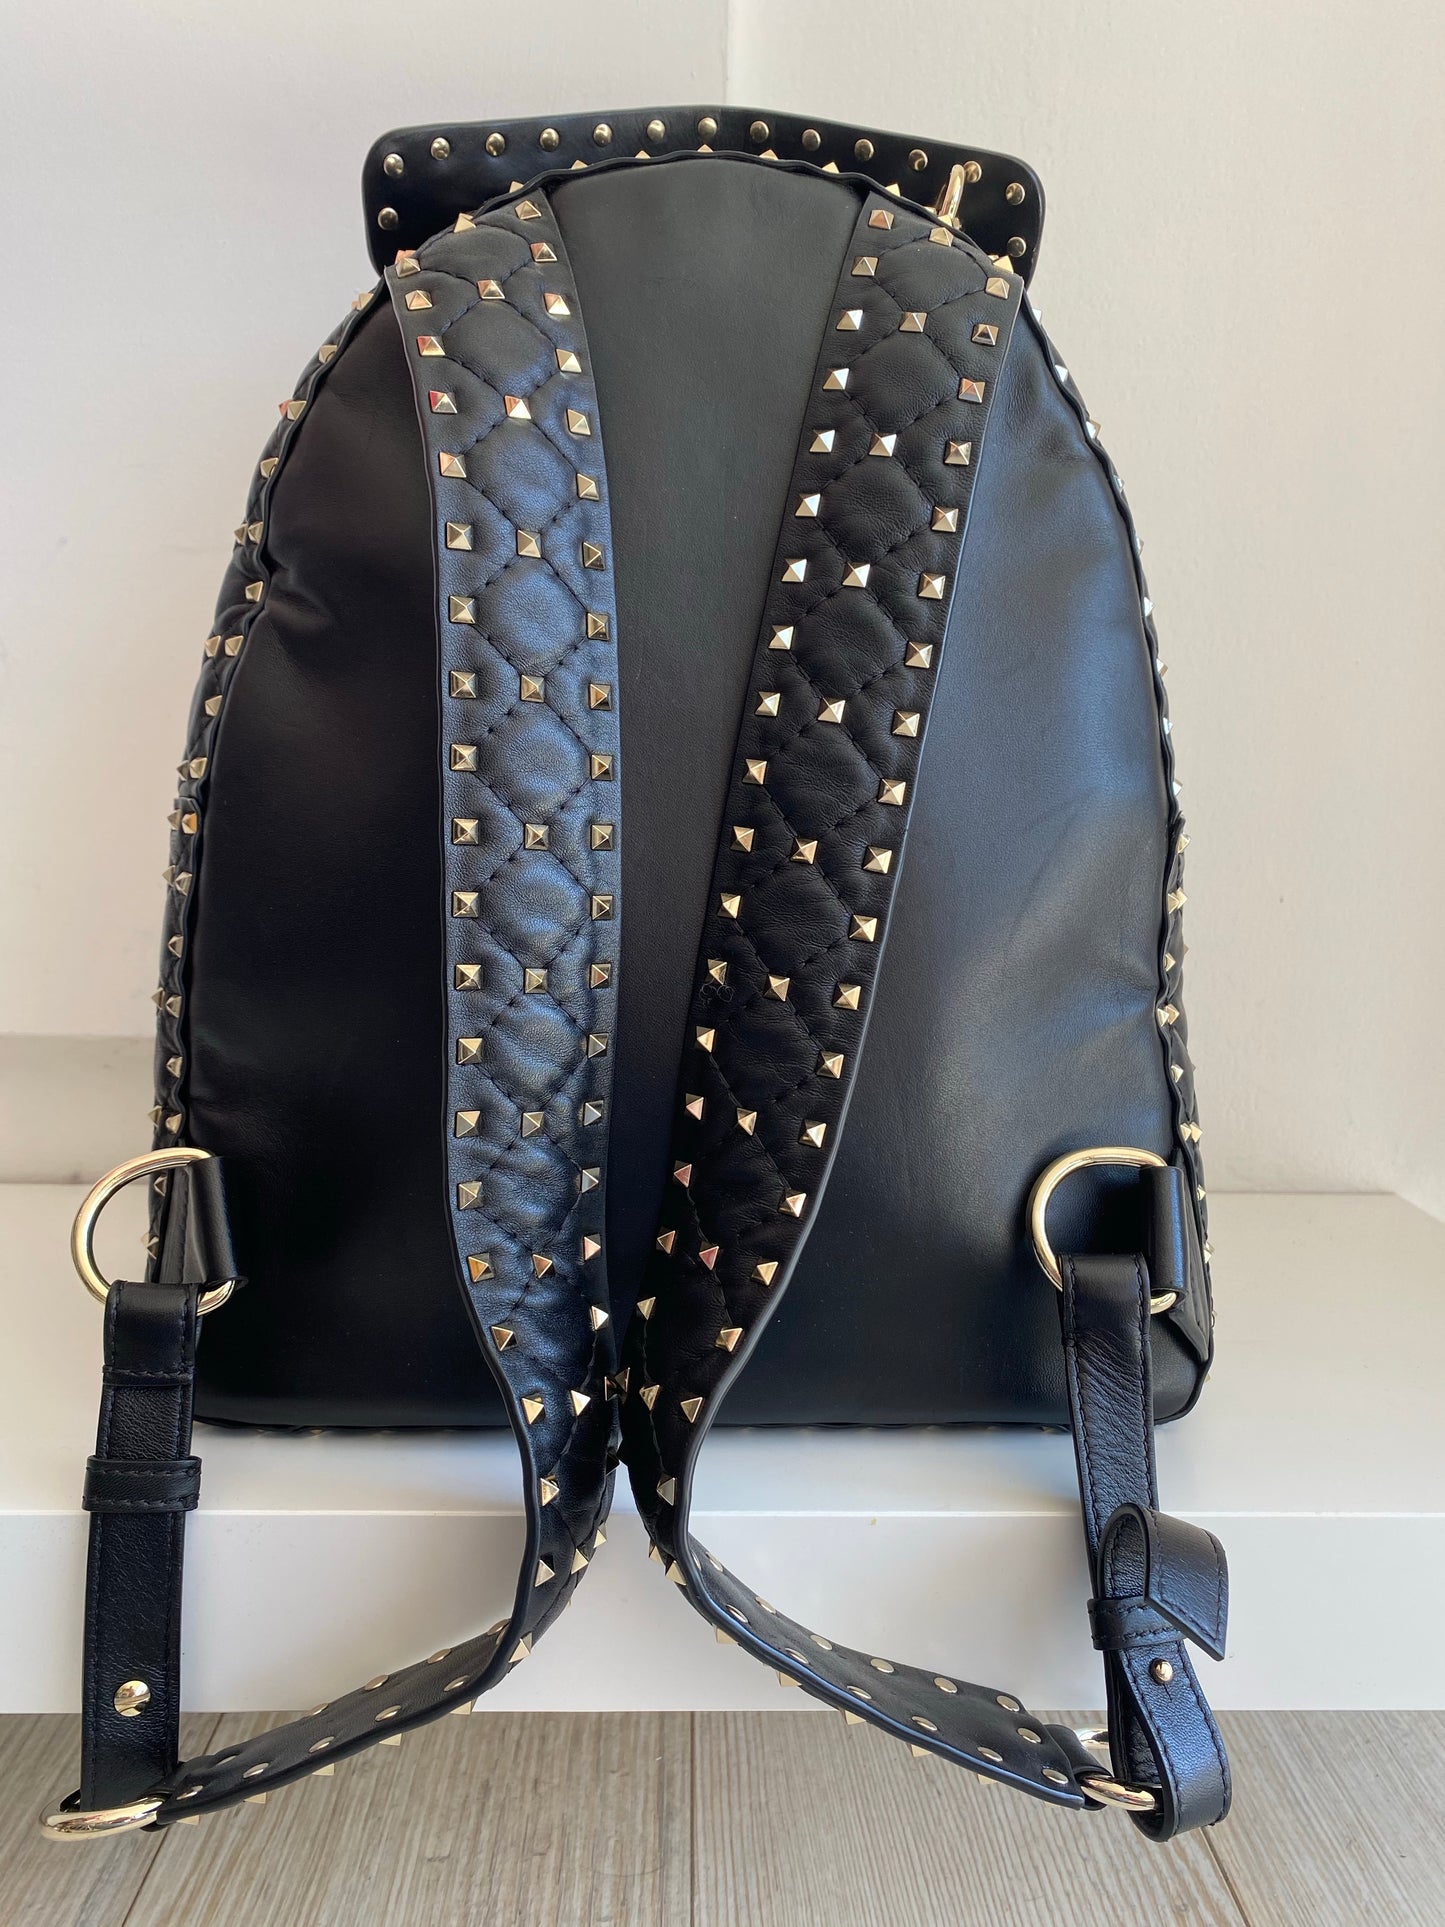 Valentino Garavani Rockstud Spike Backpack Quilted Nappa Leather